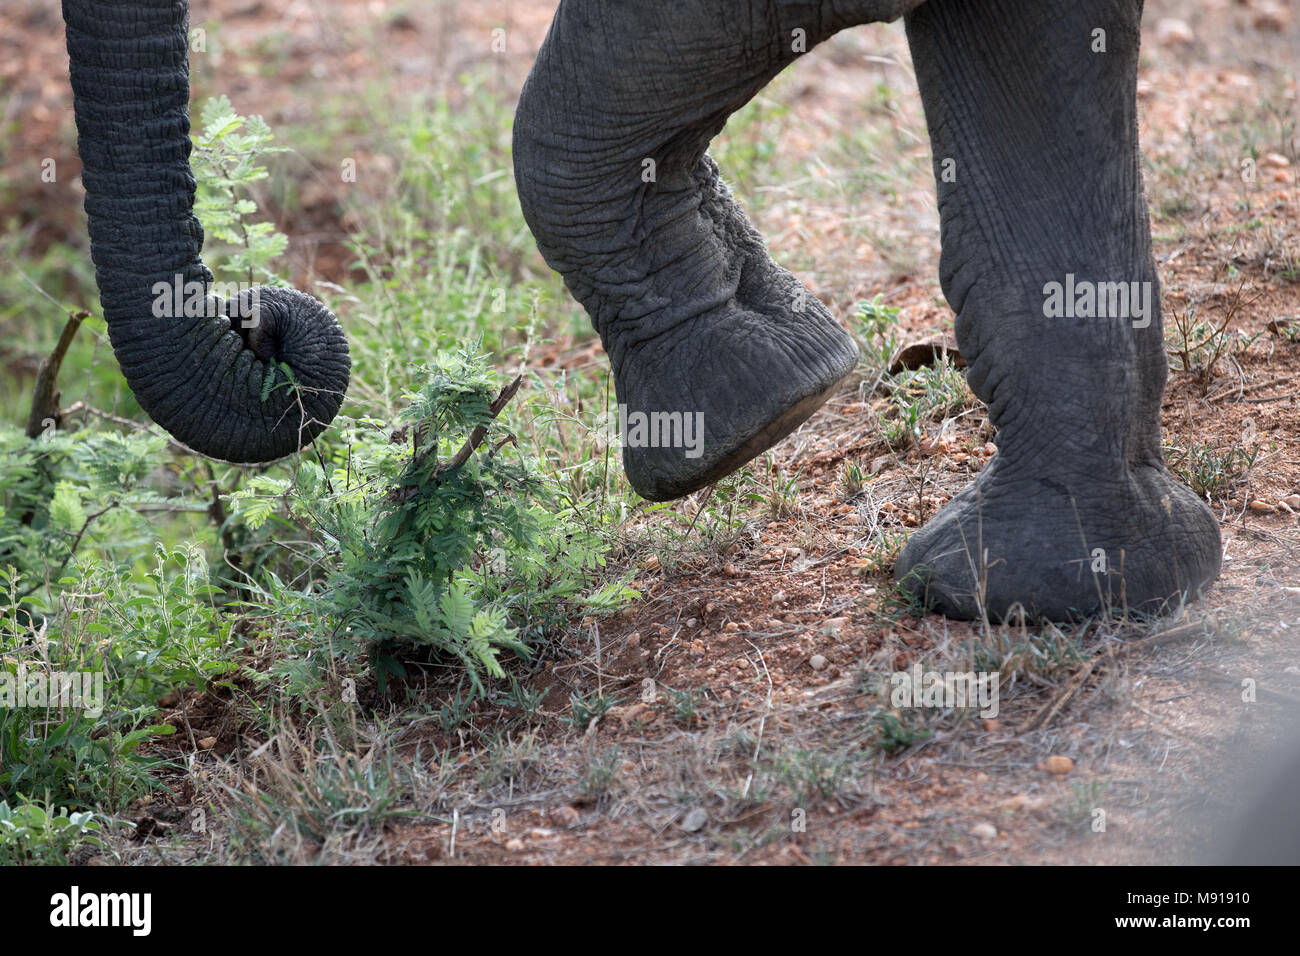 Elefante africano (Loxodonta africana). Keer-Keer. Sudáfrica. Foto de stock